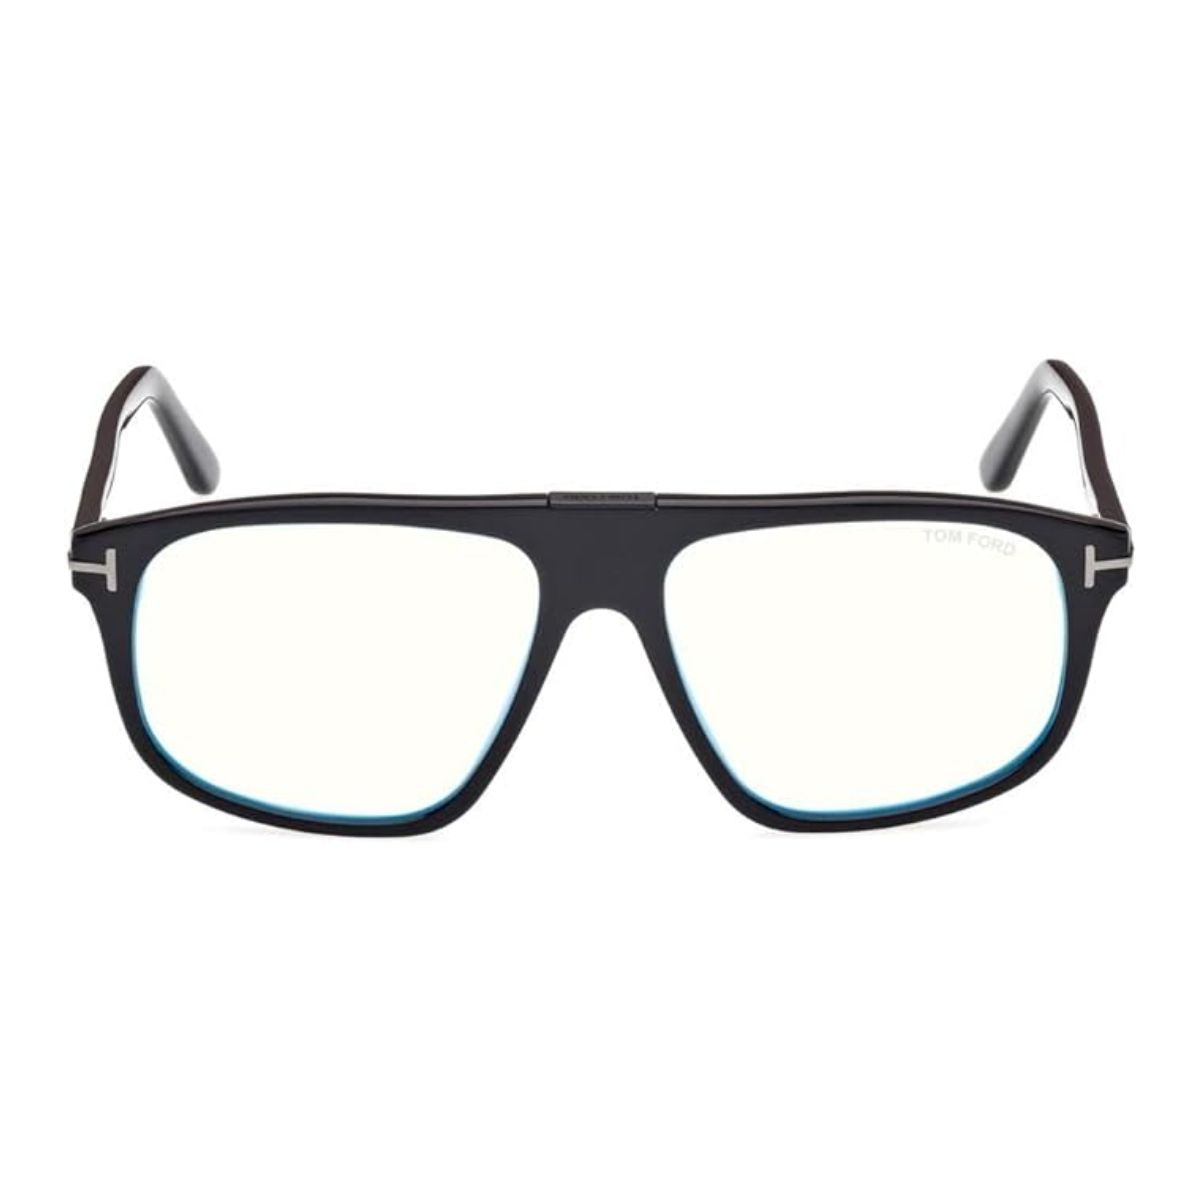 "Shop Stylish Tom Ford Square Eyeglasses For Men's At Optorium" 